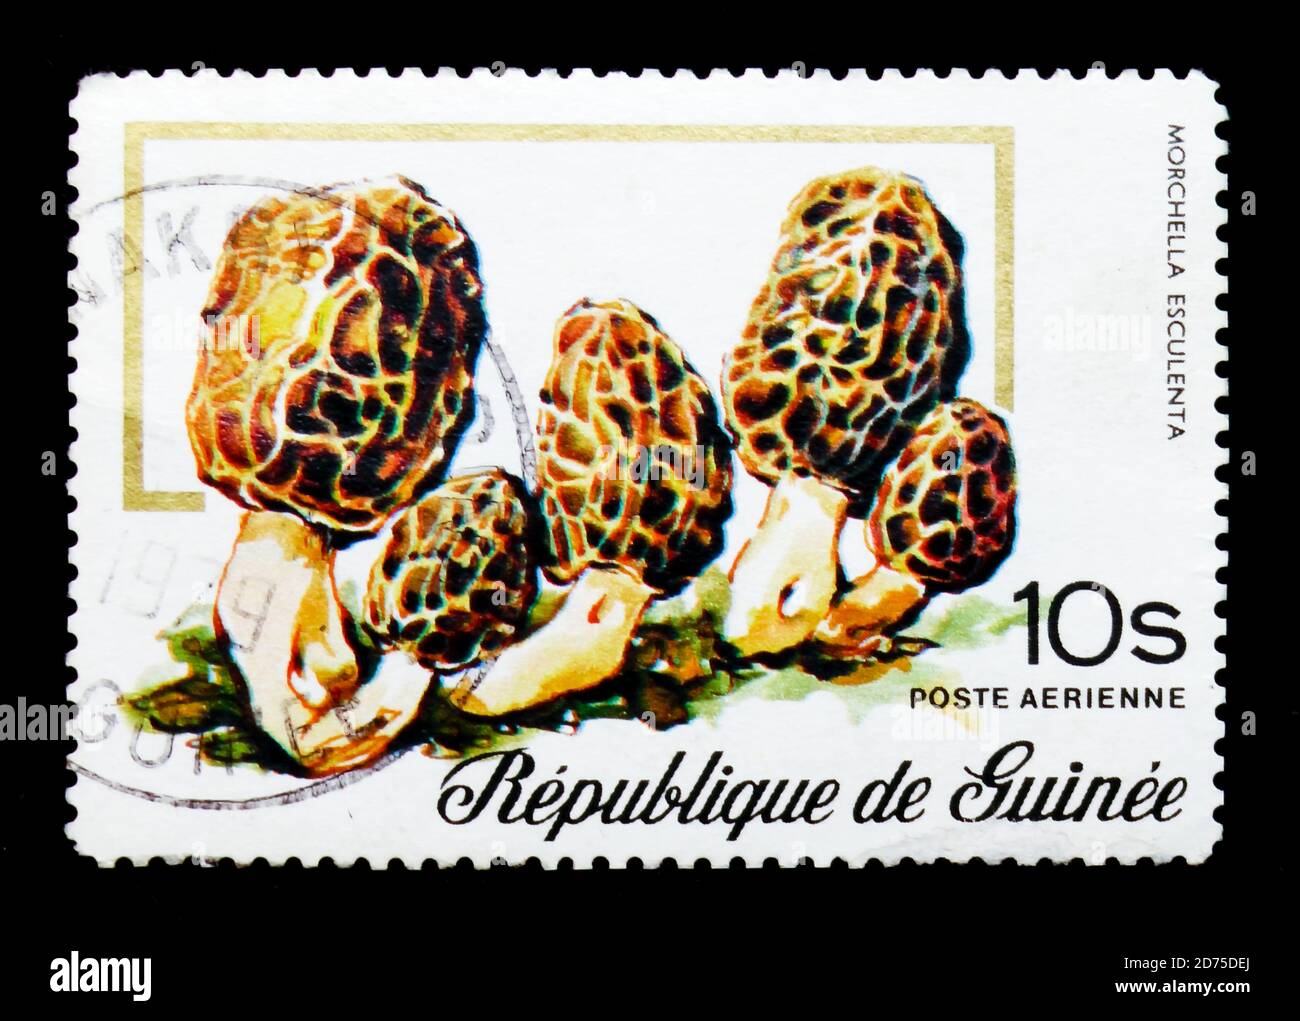 MOSCOW, RUSSIA - JANUARY 2, 2018: A stamp printed in Guinea shows Morchella Esculenta, Mushrooms serie, circa 1977 Stock Photo